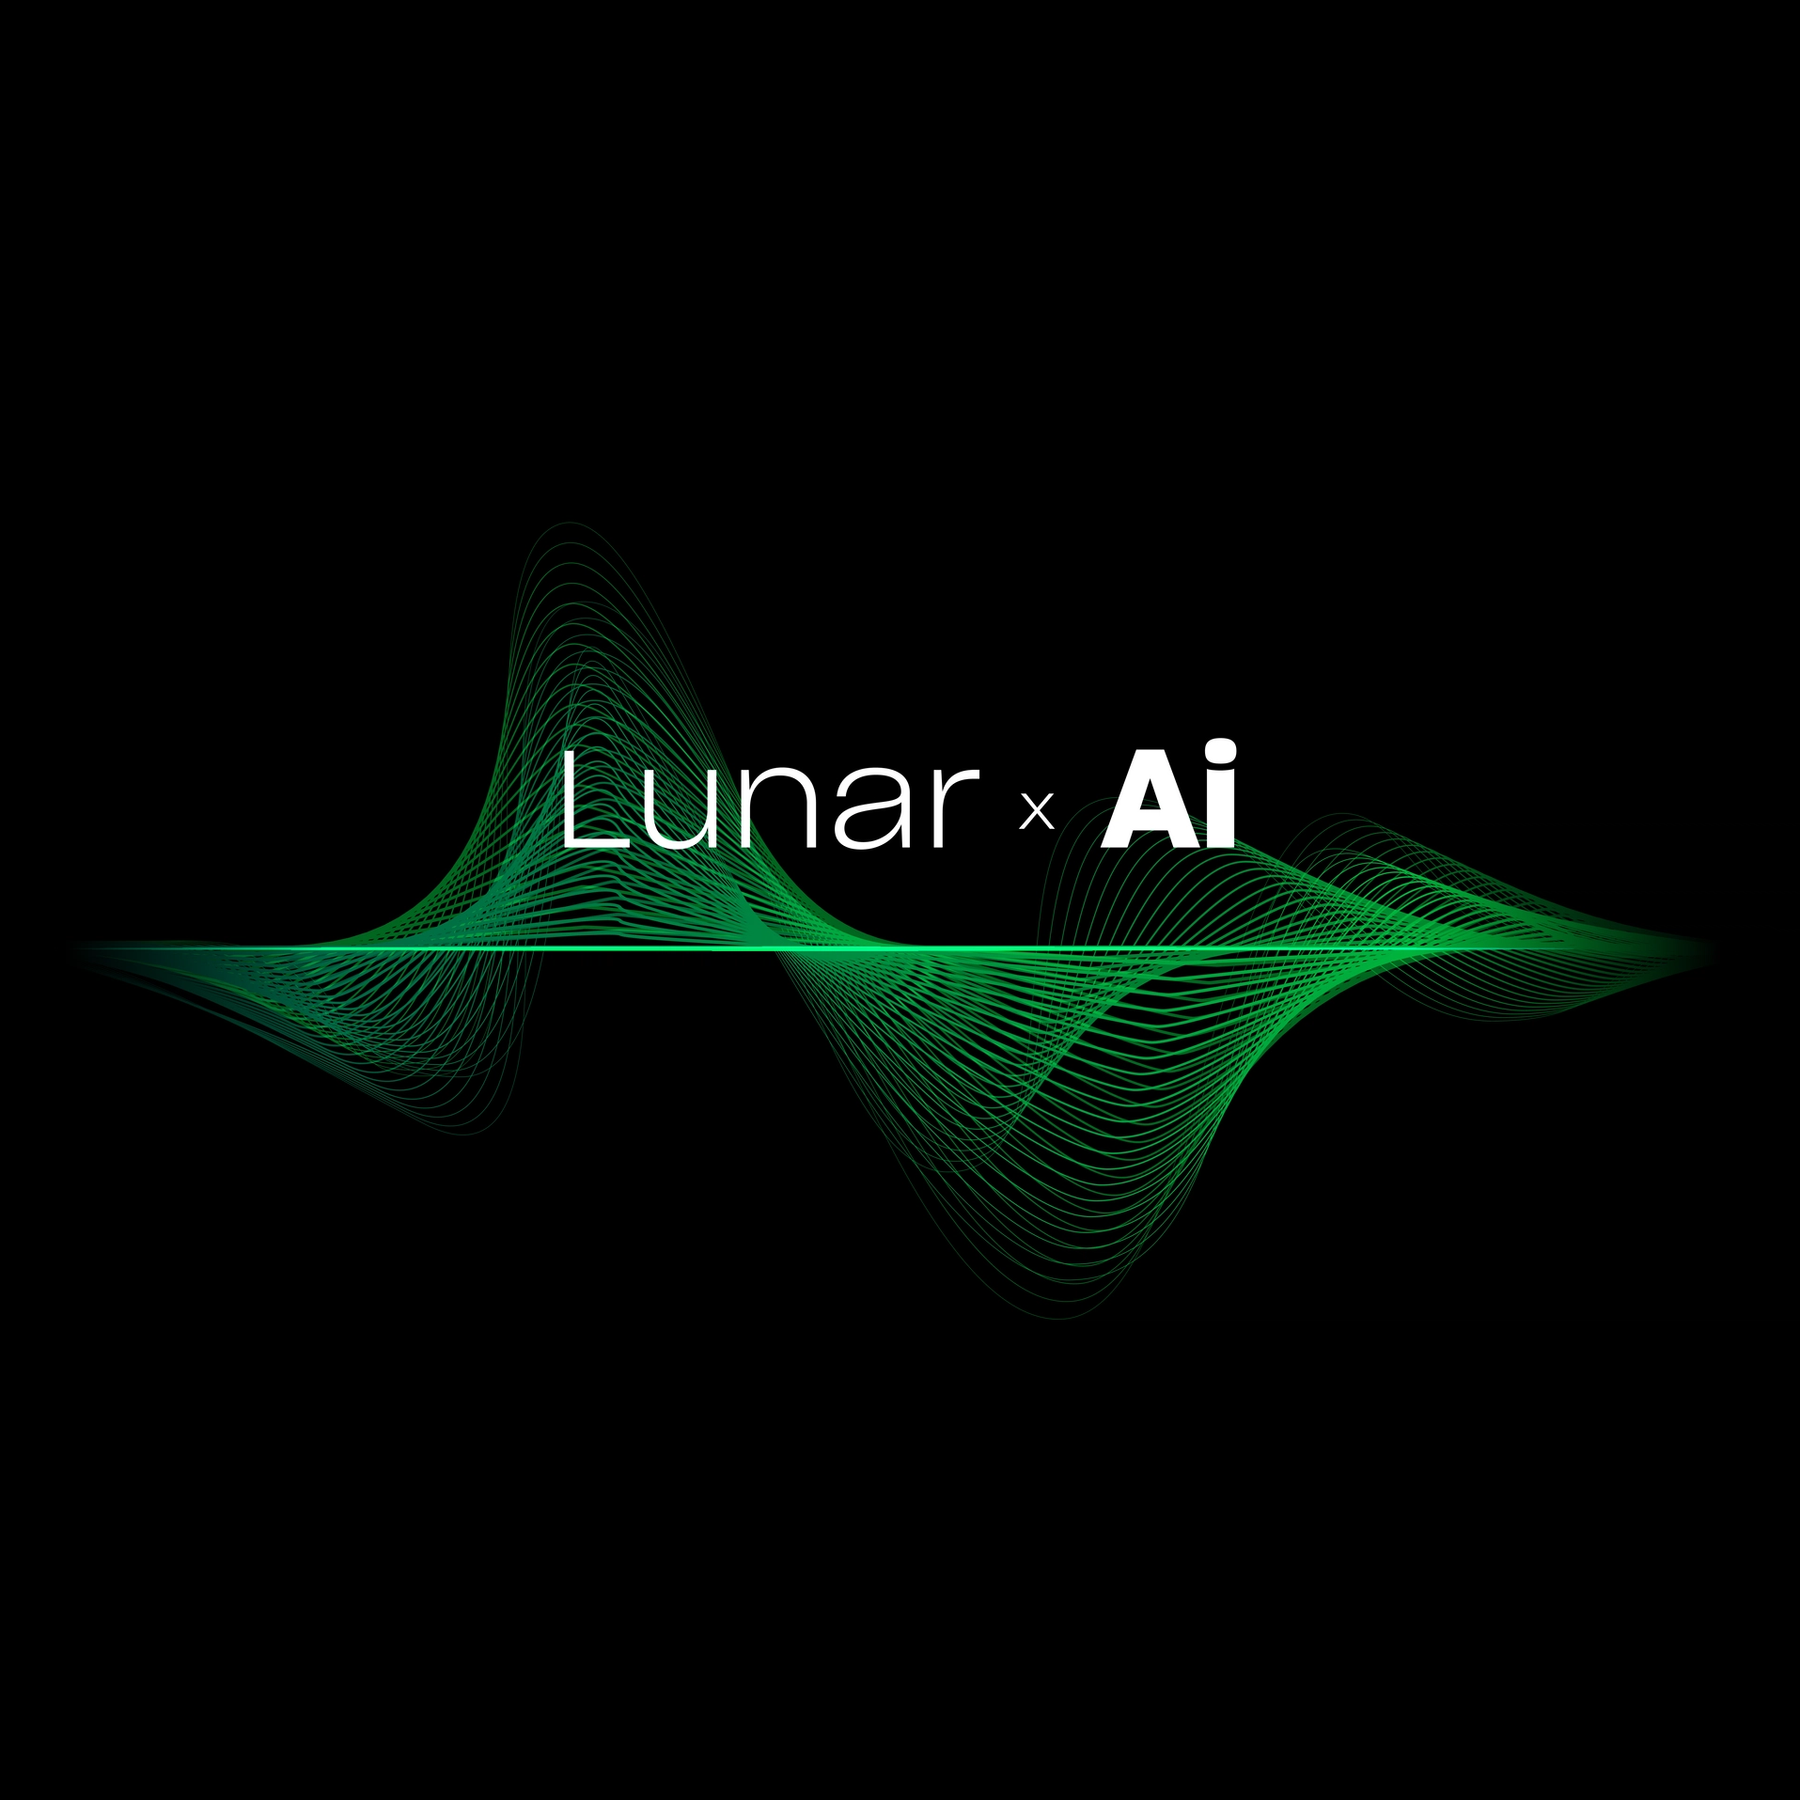 Lunar_AI_video_fallback_1080x1920_5x